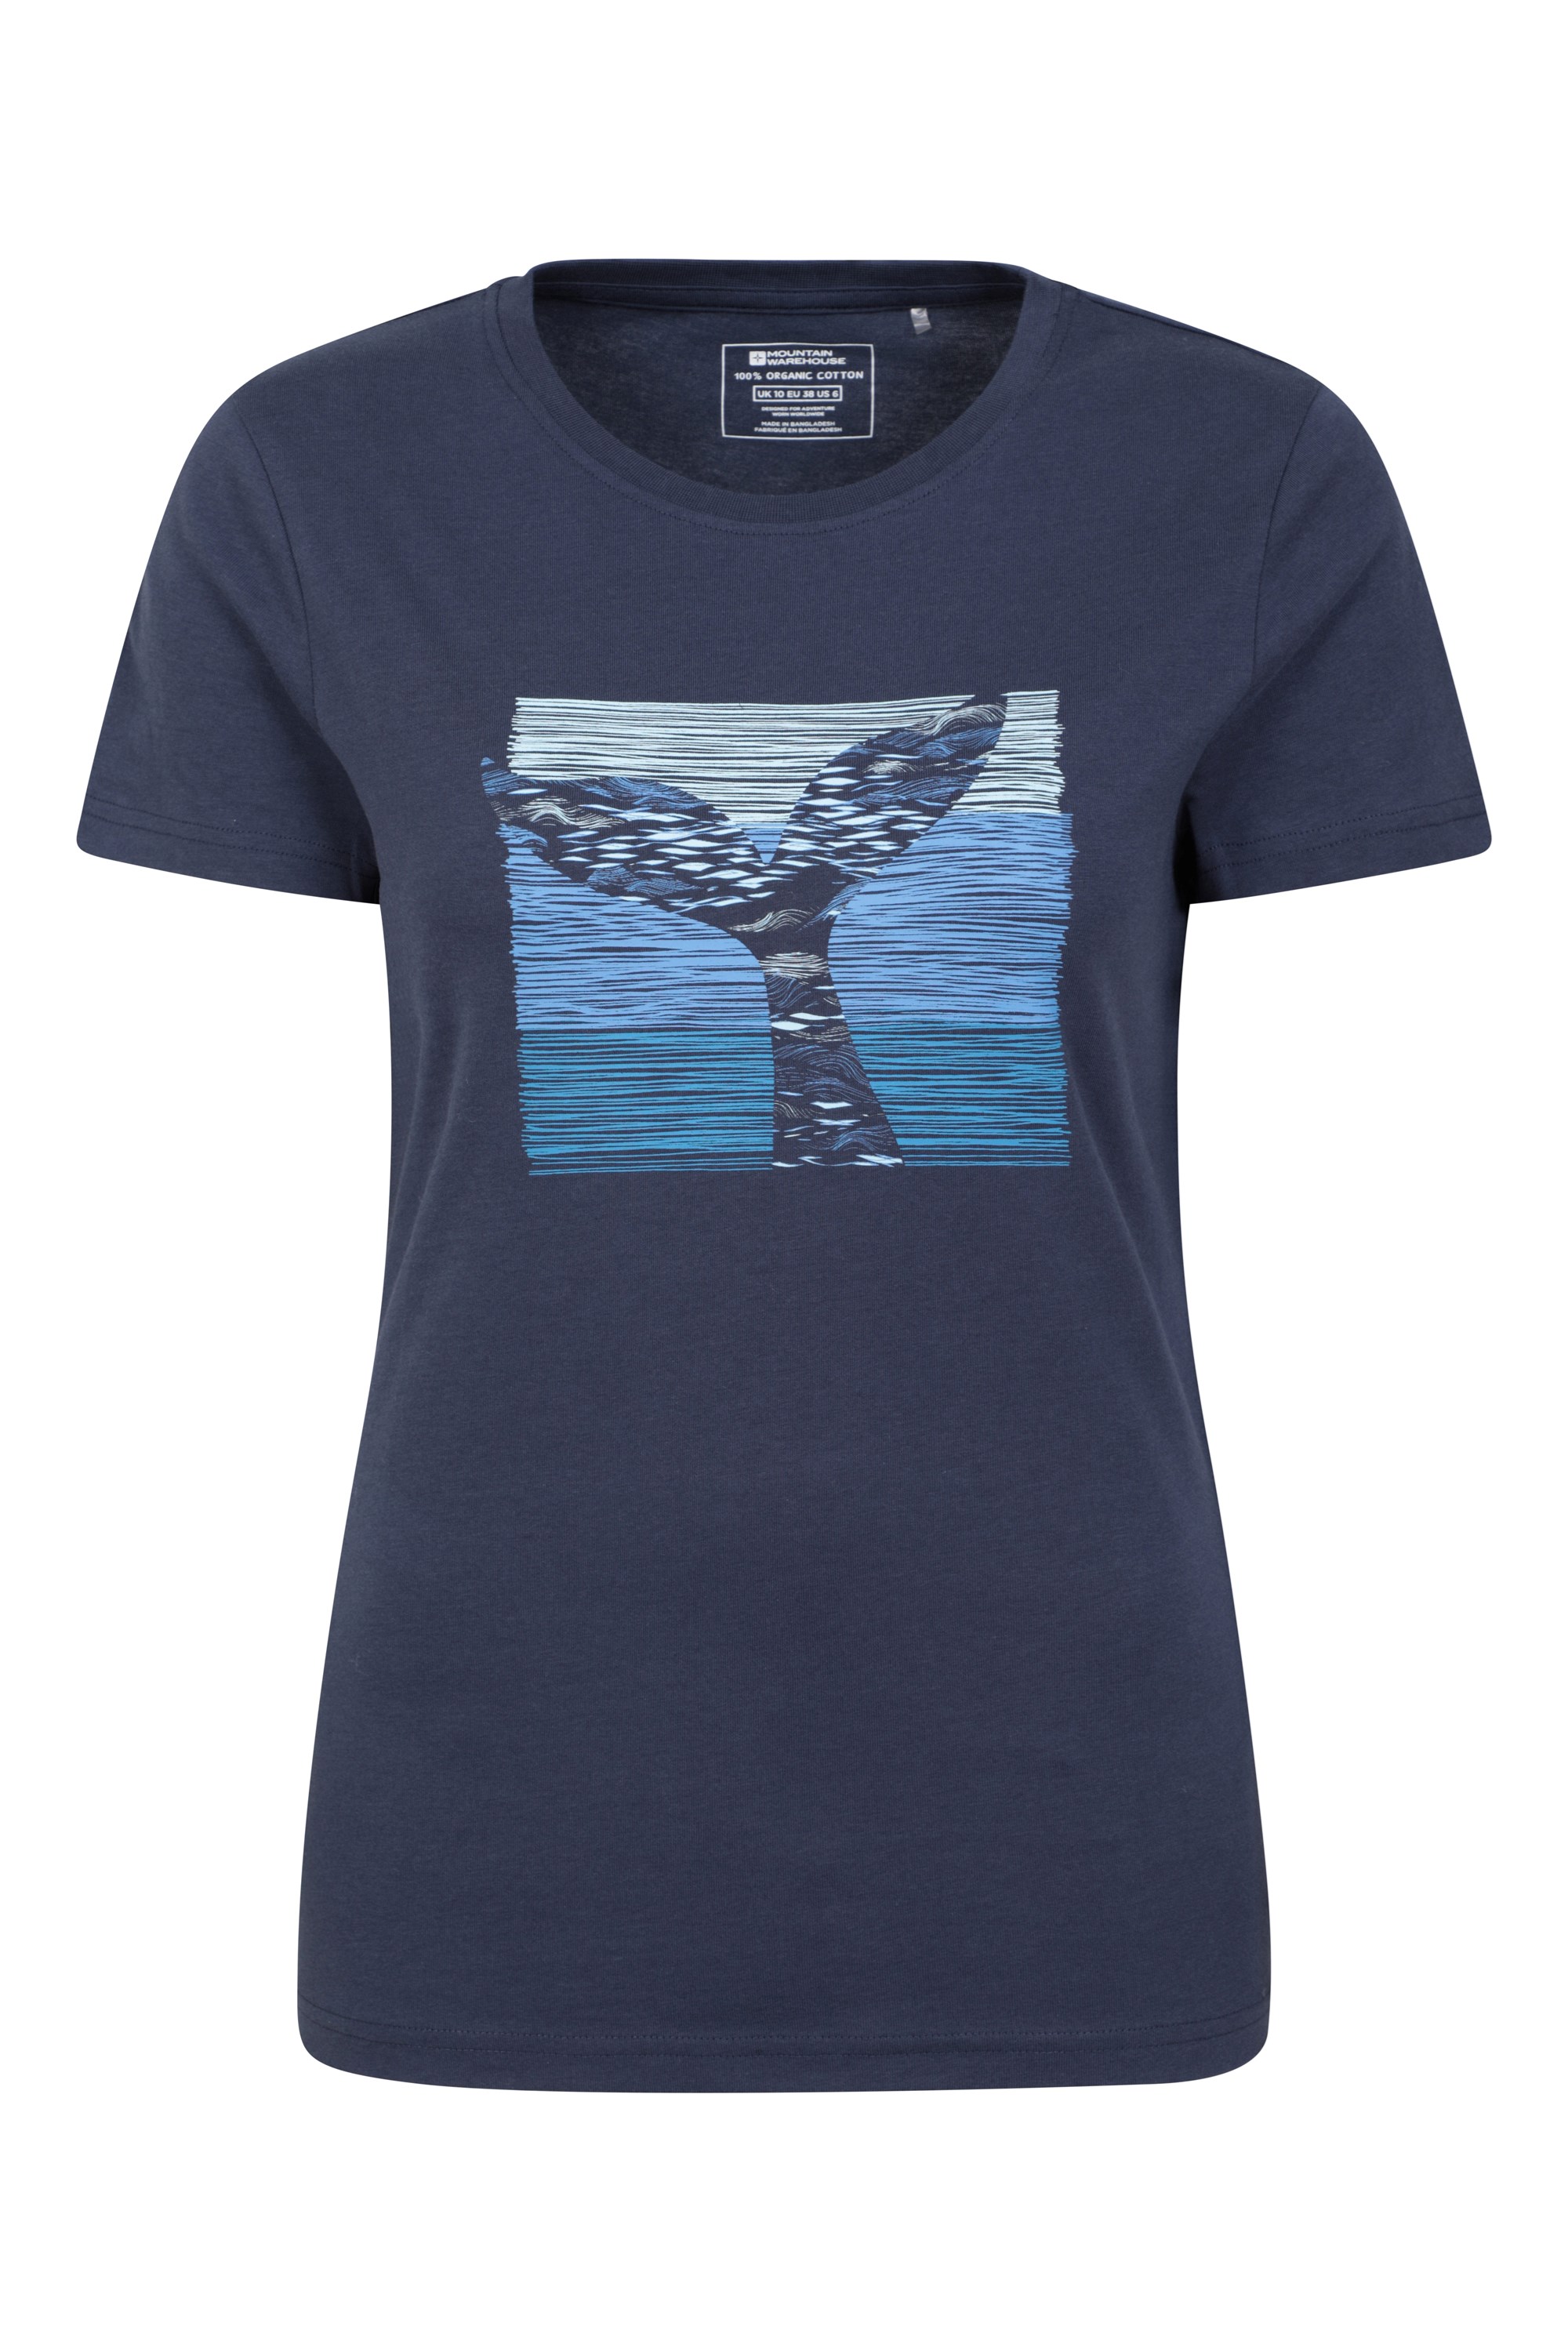 Whale Tail Womens Organic T-Shirt - Navy